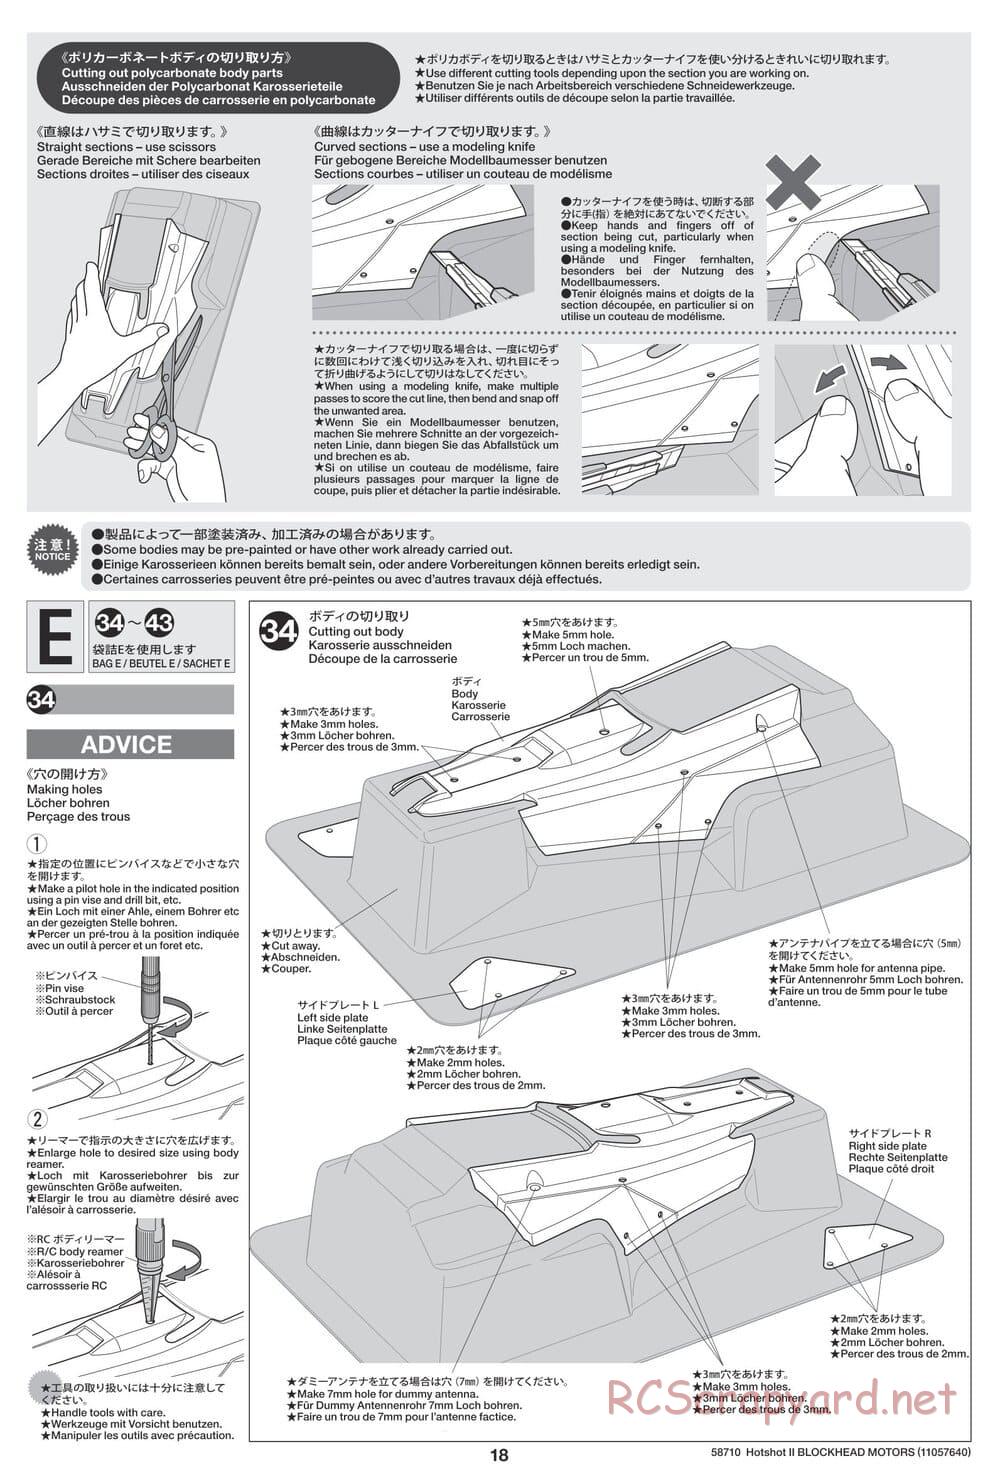 Tamiya - Hotshot II Blockhead Motors - HS Chassis - Manual - Page 18